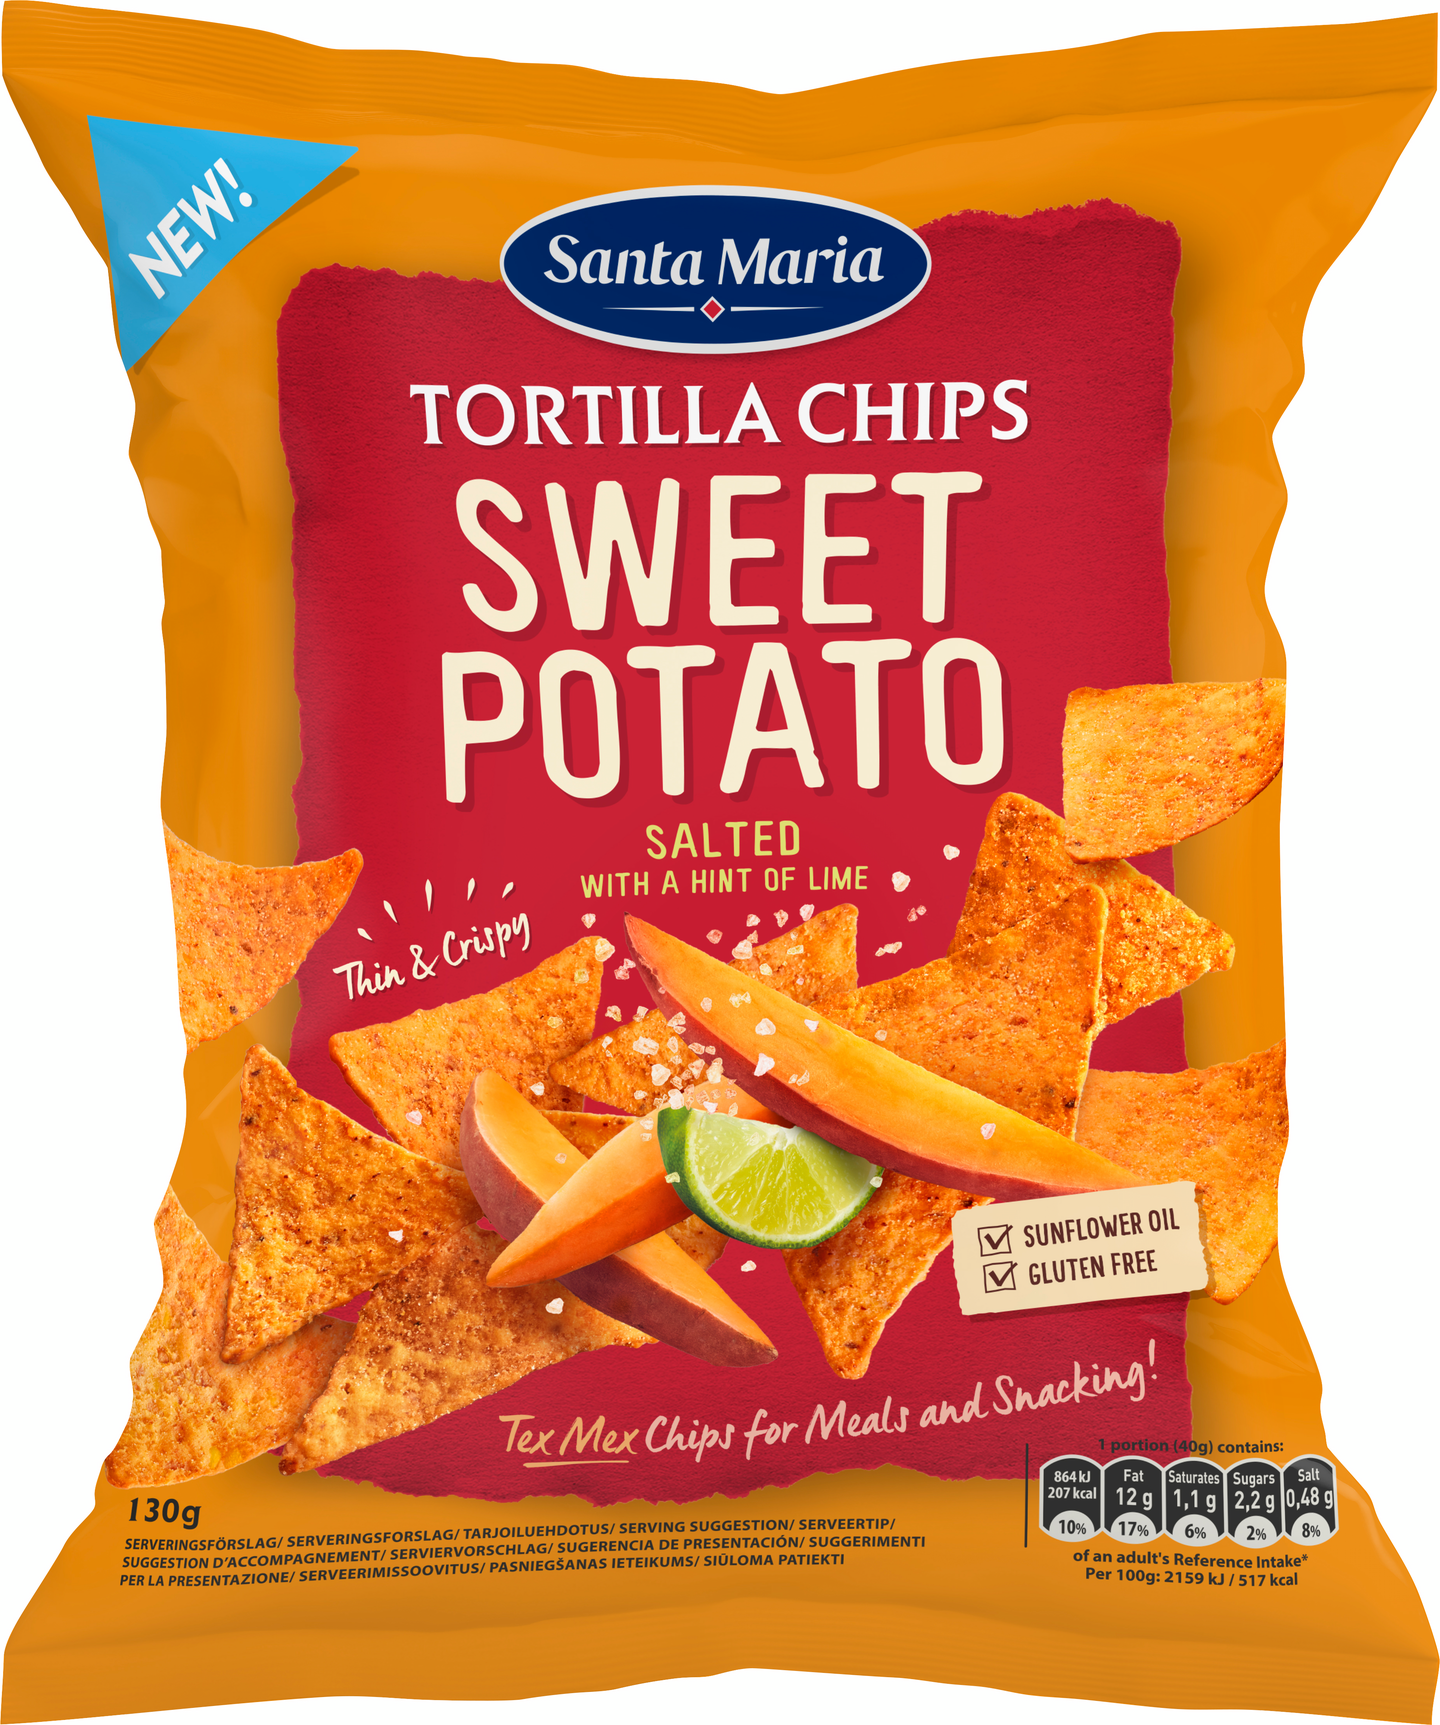 Santa Maria Tortilla Chips 130g Sweet Potato